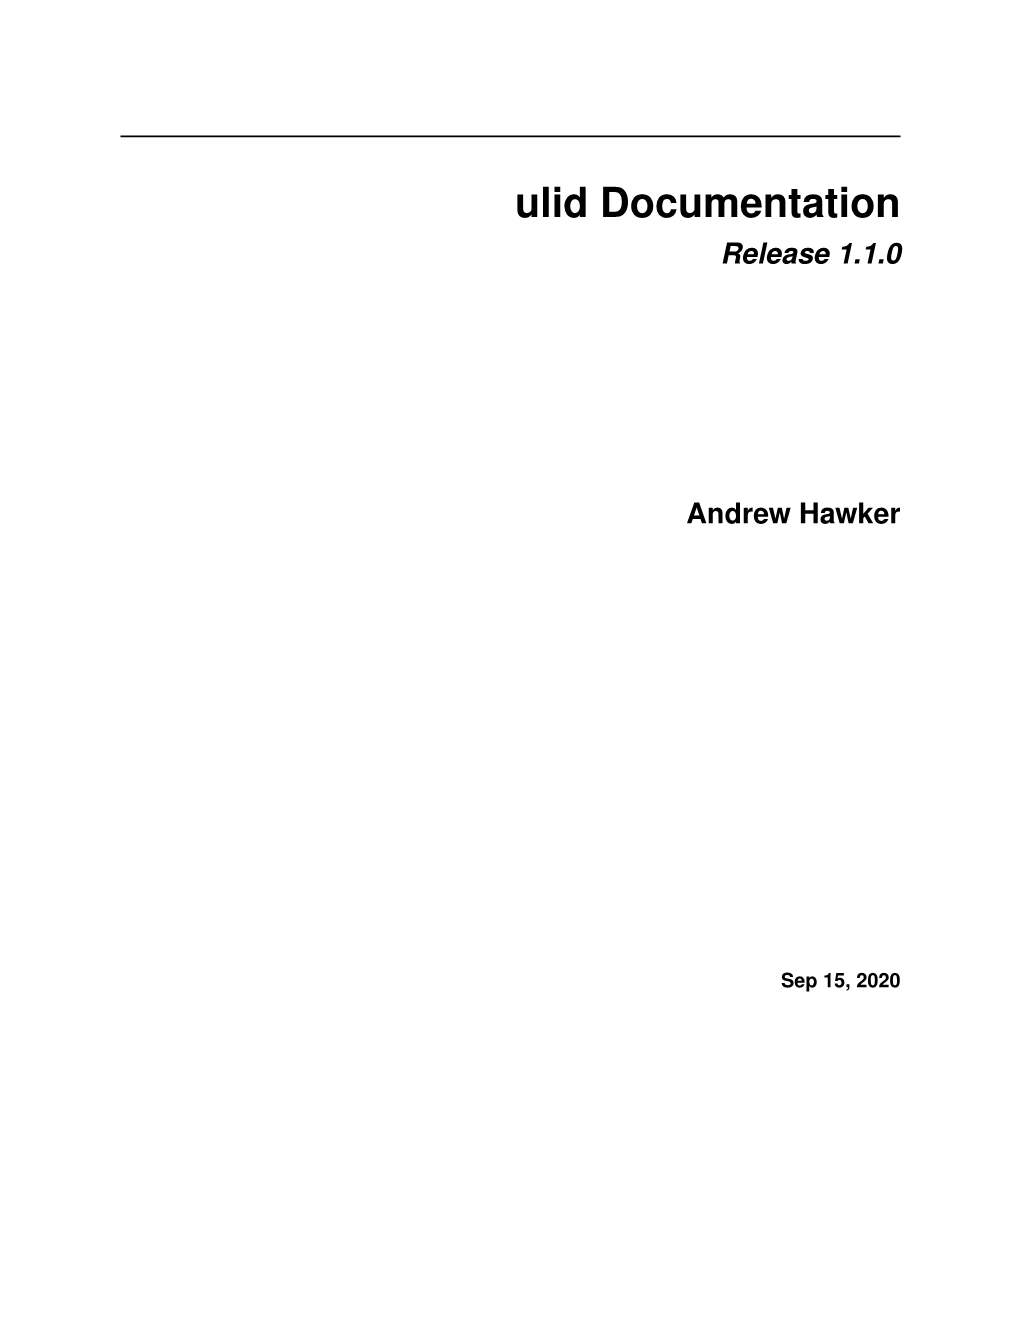 Ulid Documentation Release 1.1.0